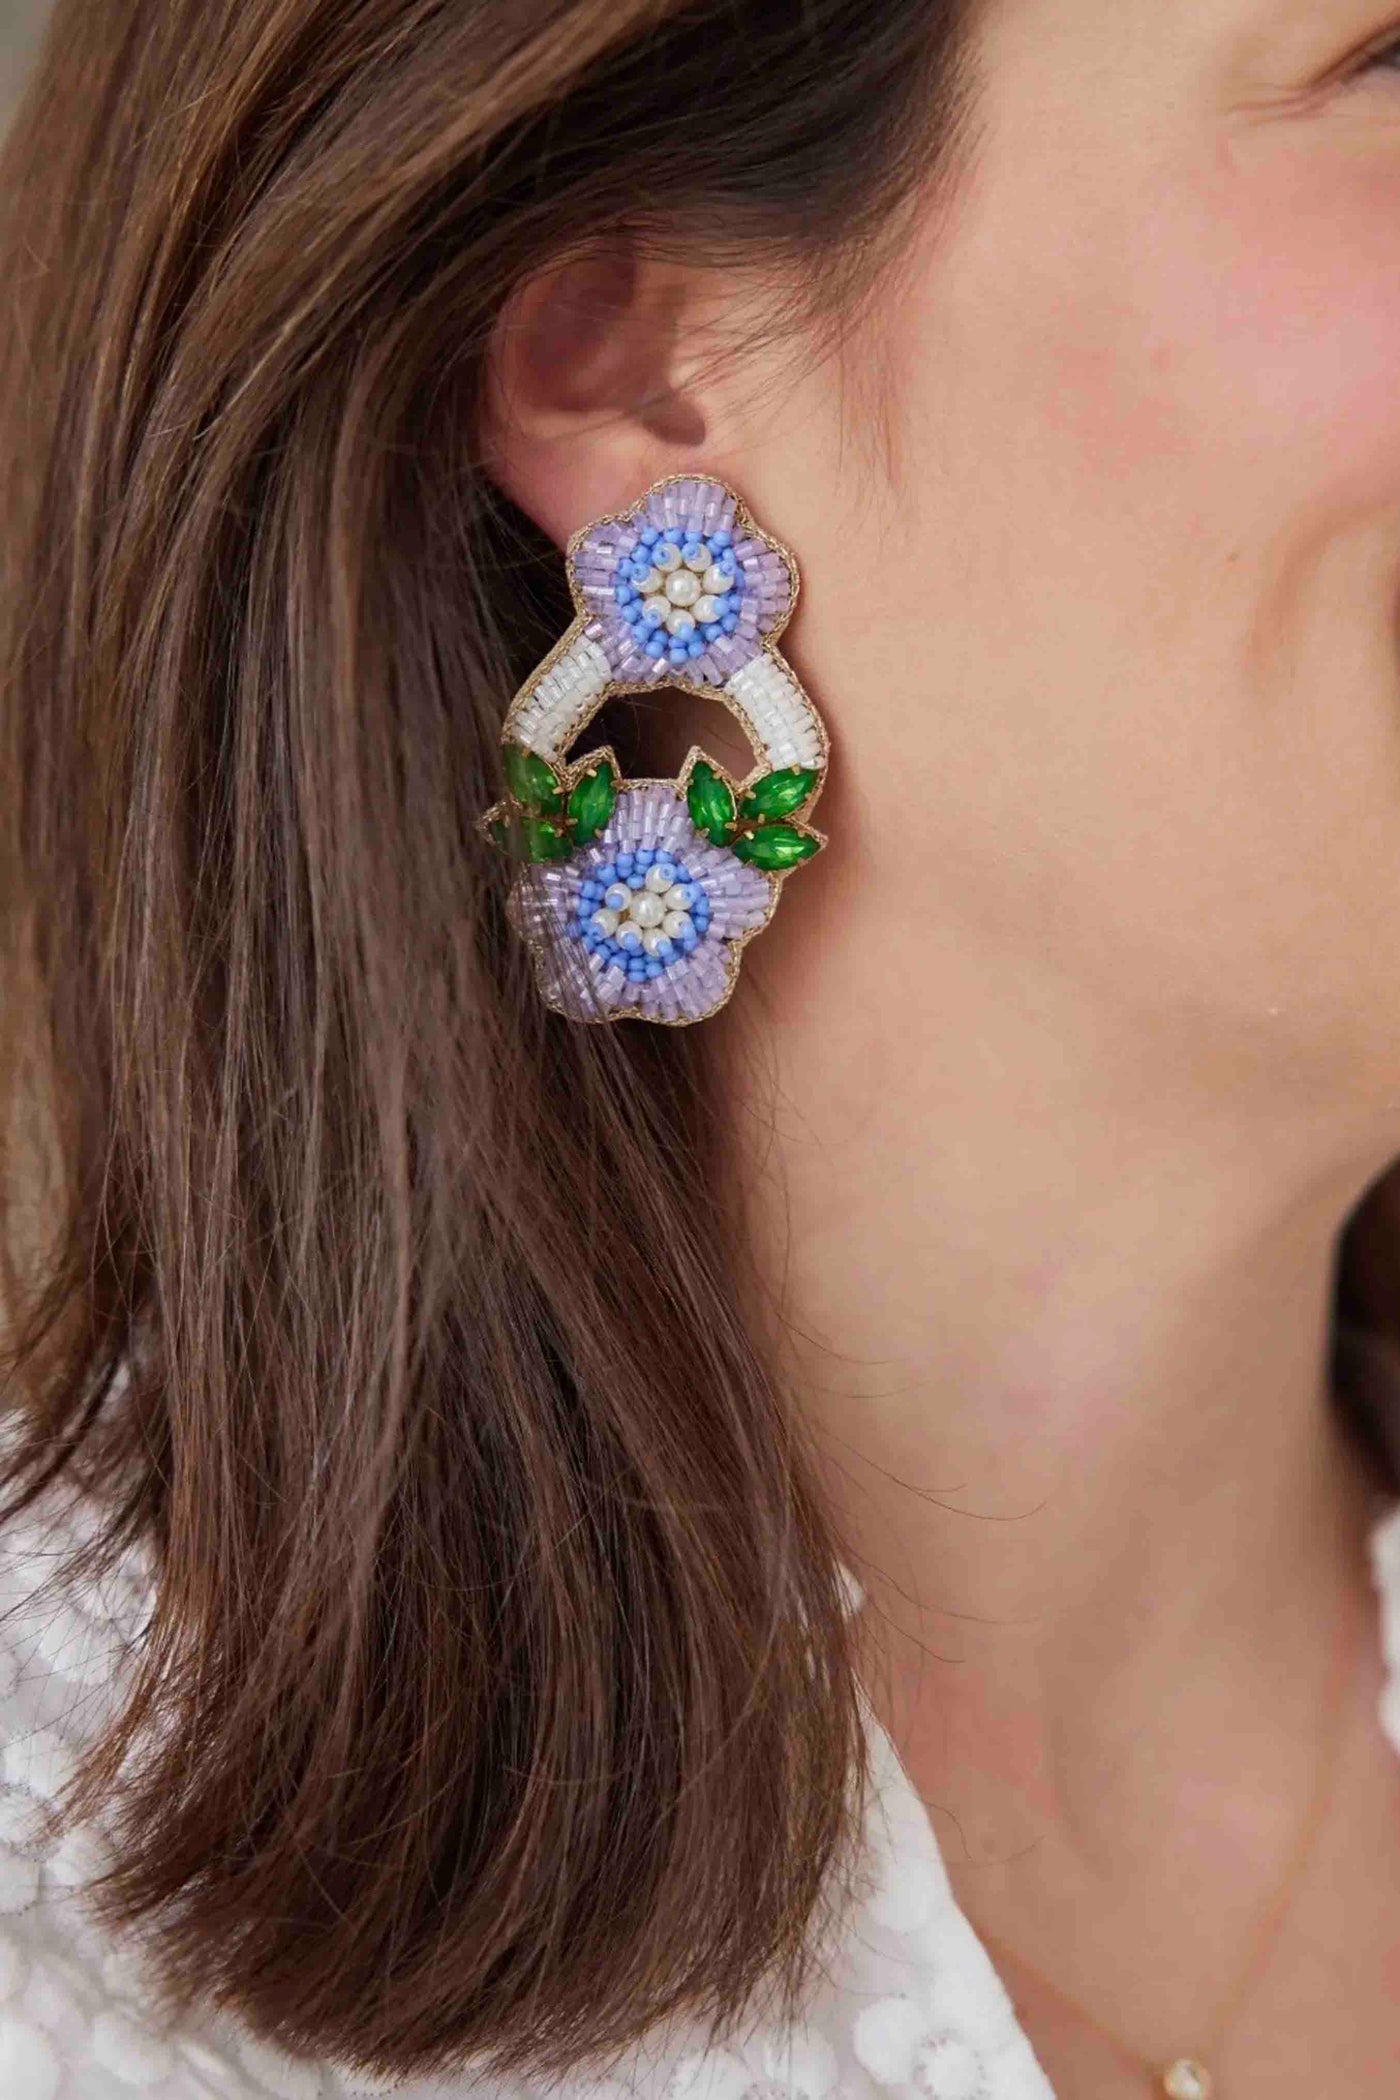 model wearing the Periwinkle East Hampton Flower Earrings by Beth Ladd Collections